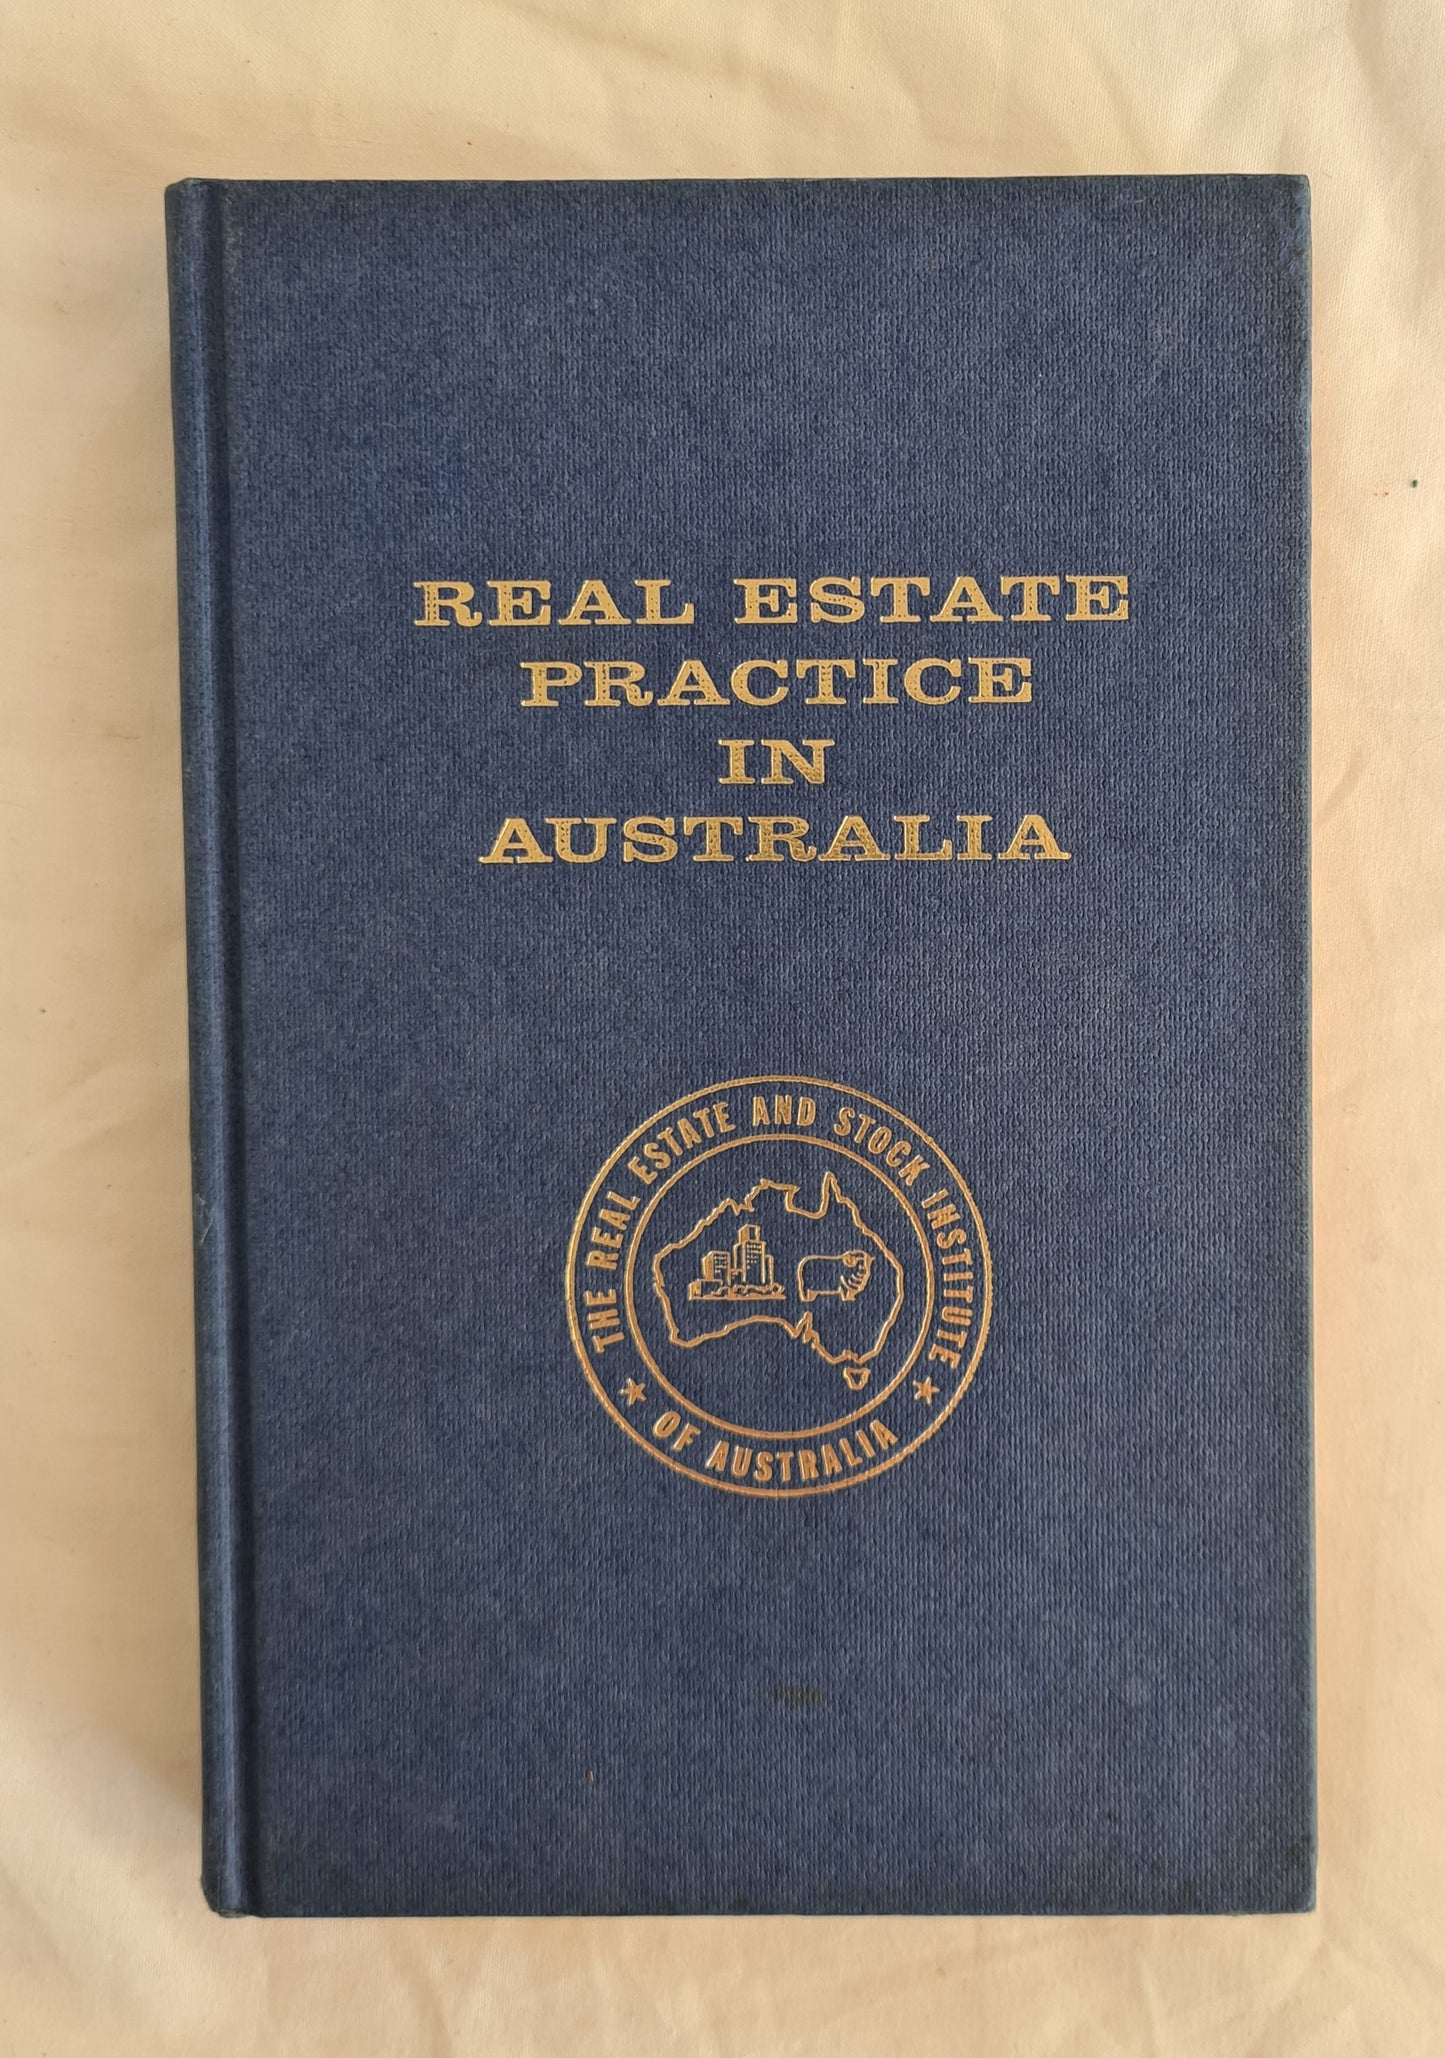 Real Estate Practice in Australia